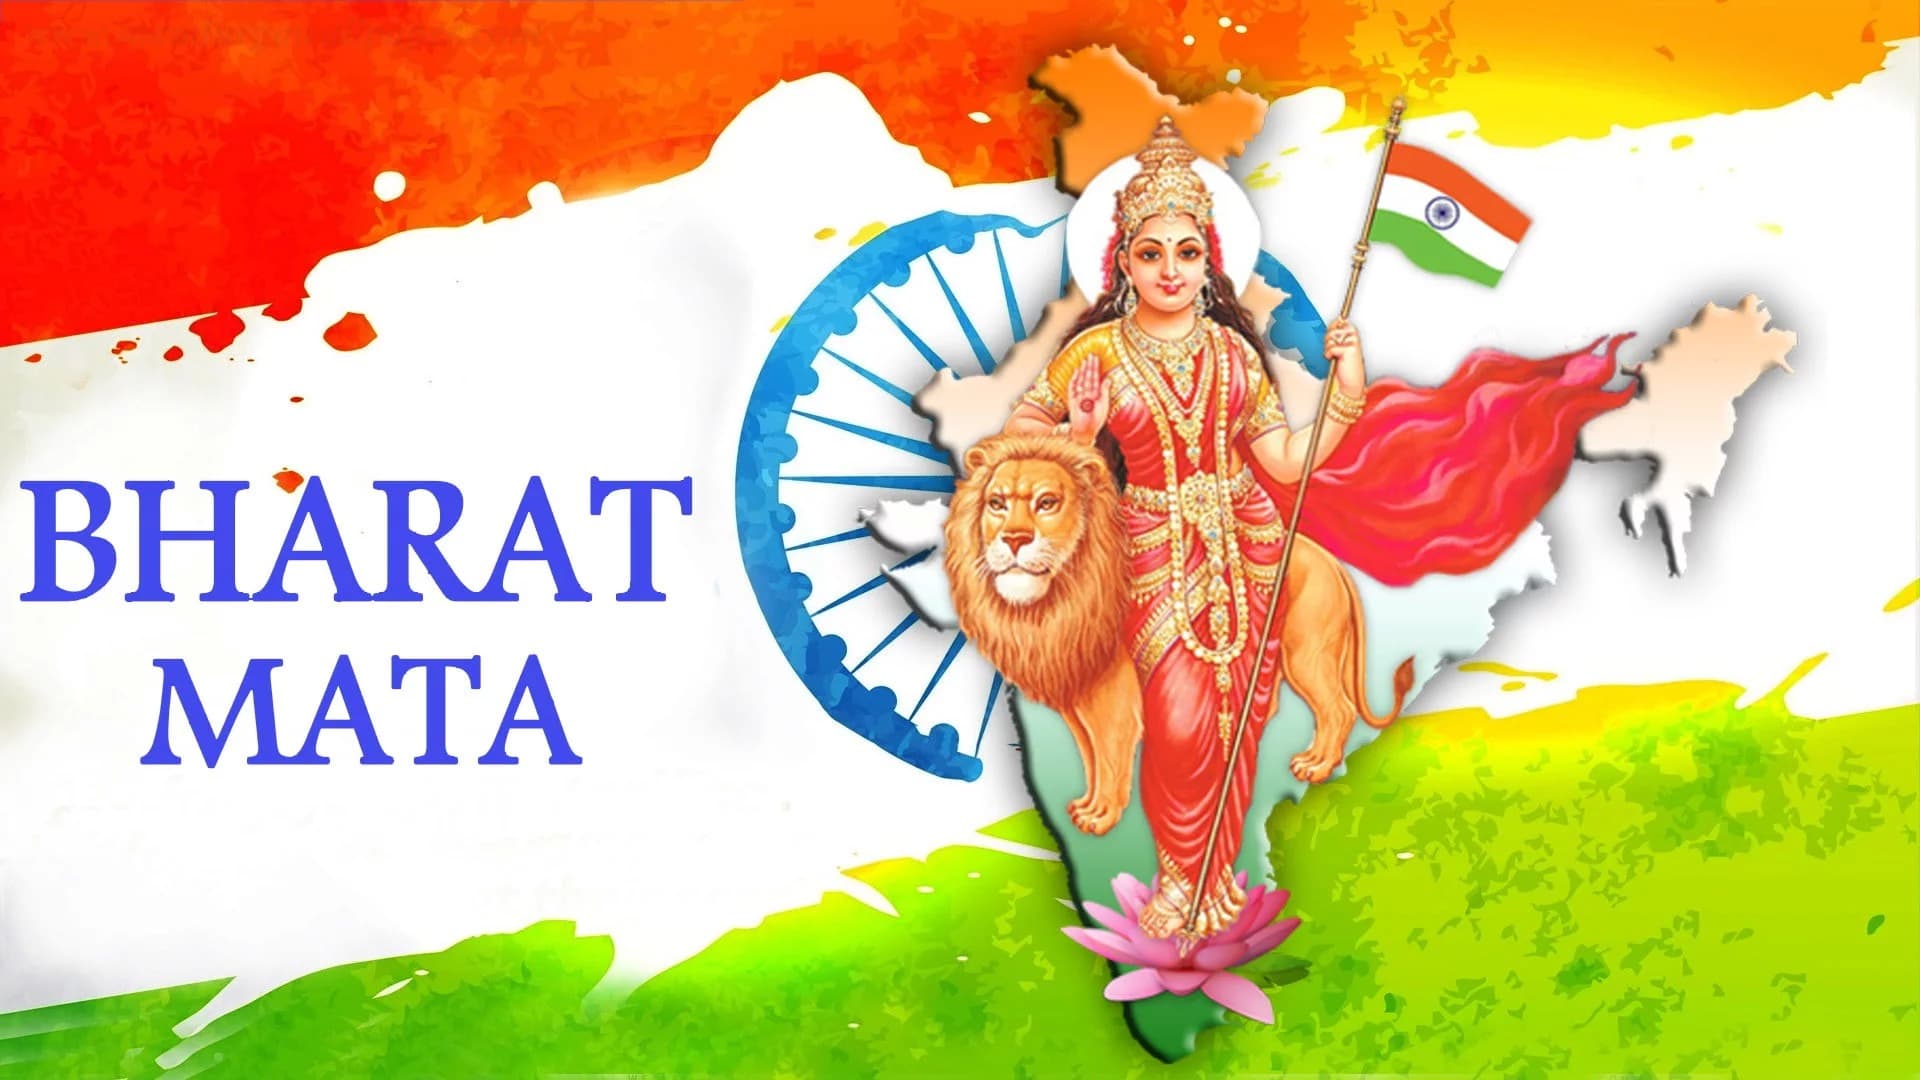 Bharat Mata, The Mother India